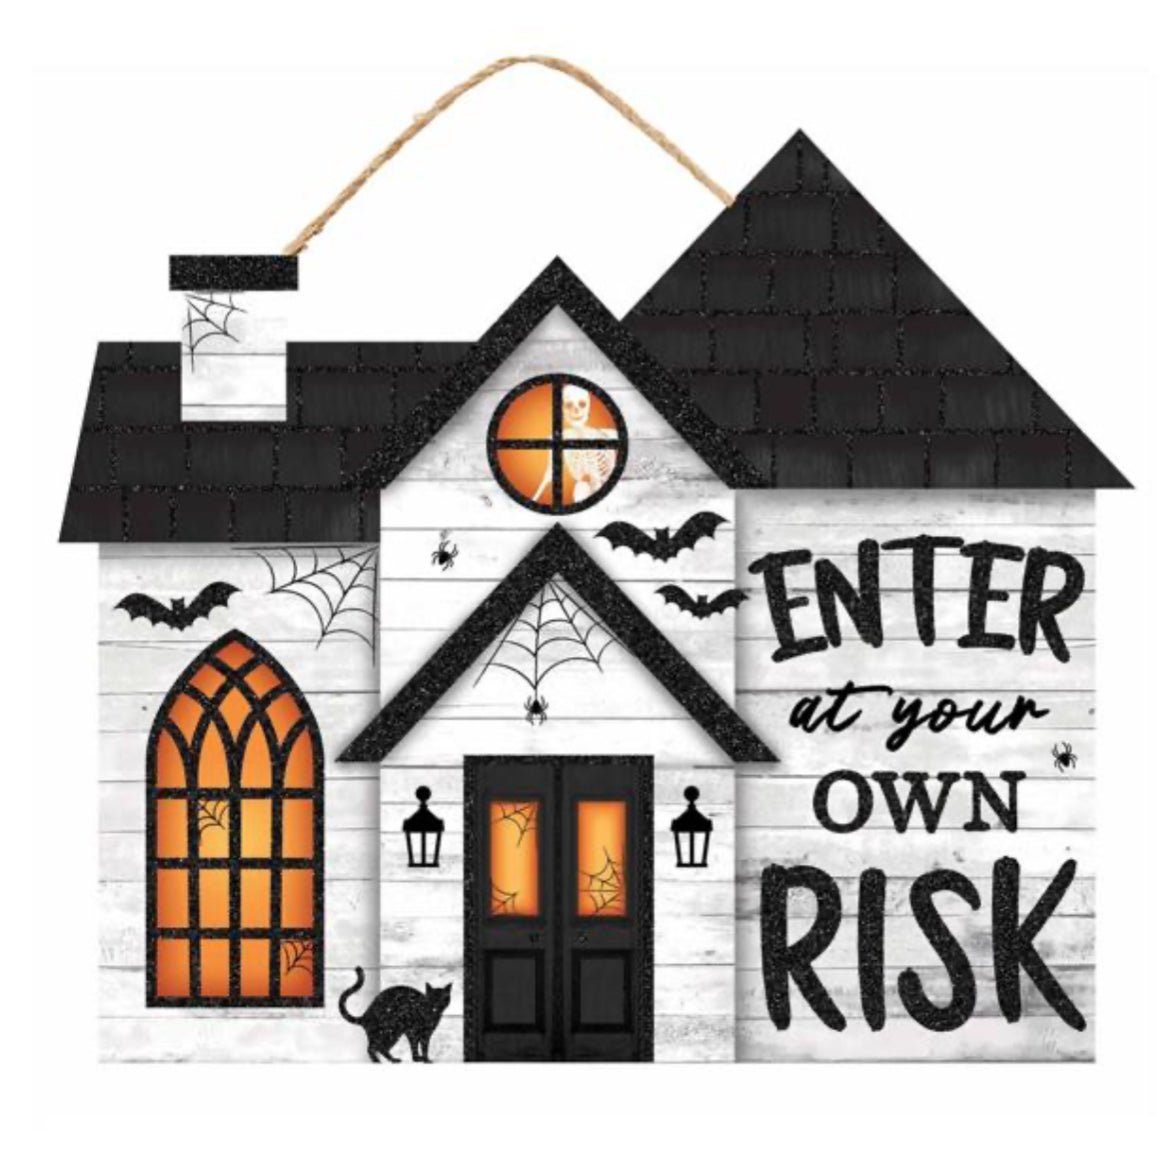 Enter if you dare haunted house sign - Greenery MarketSeasonal & Holiday DecorationsAP8885